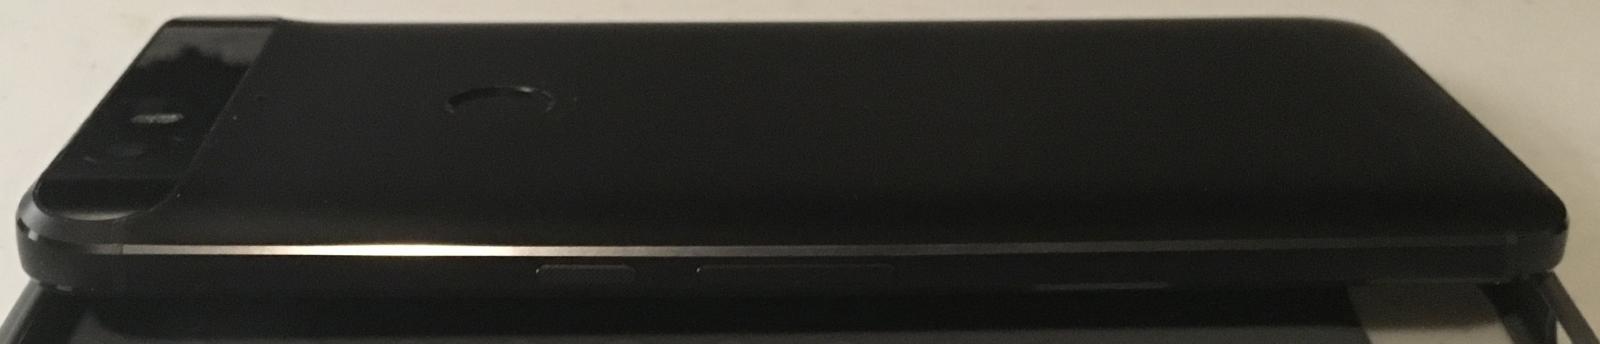 For sale Nexus 6p Black 64gb